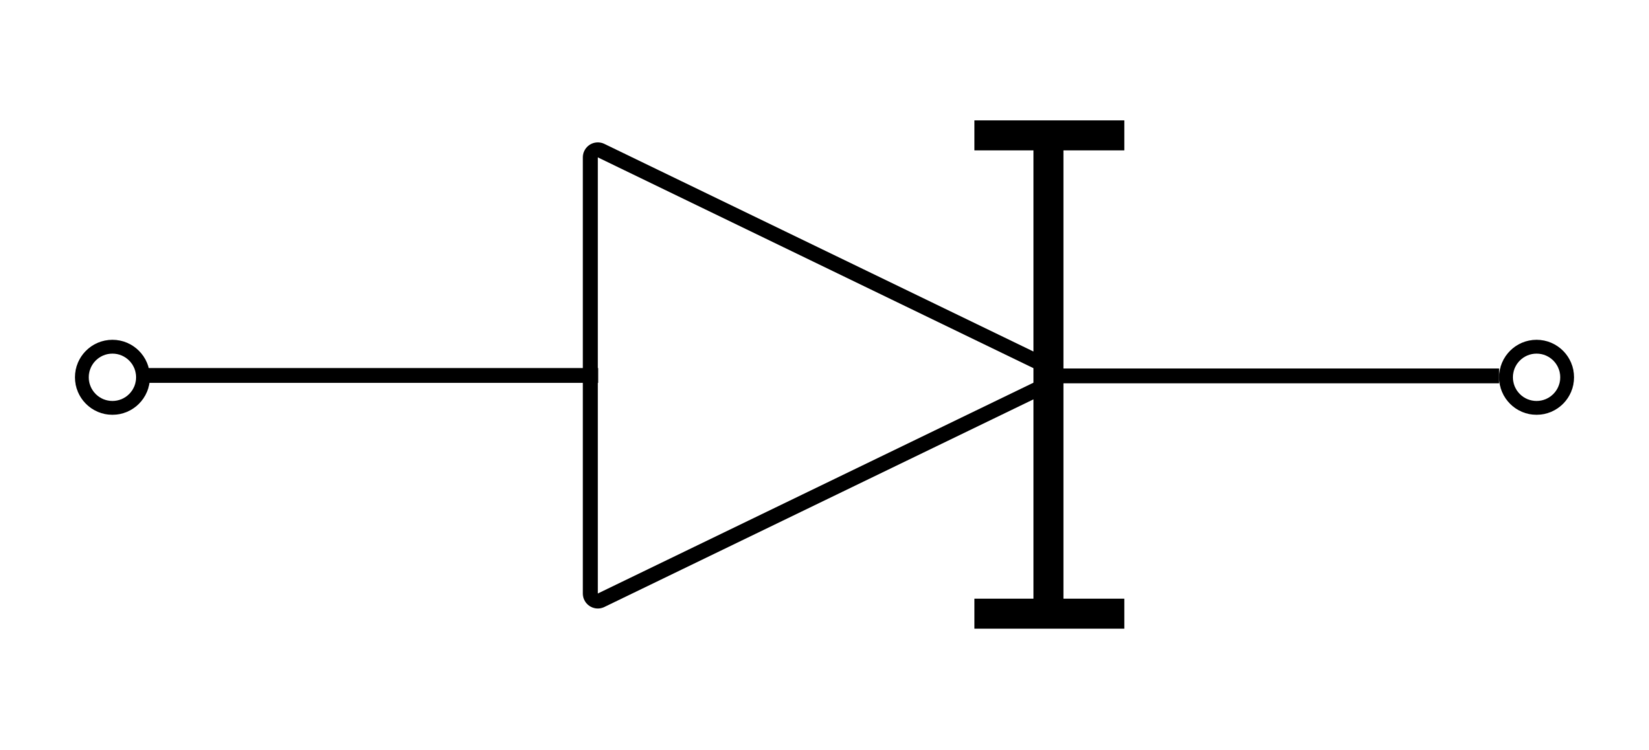 Diagram,Line,Parallel